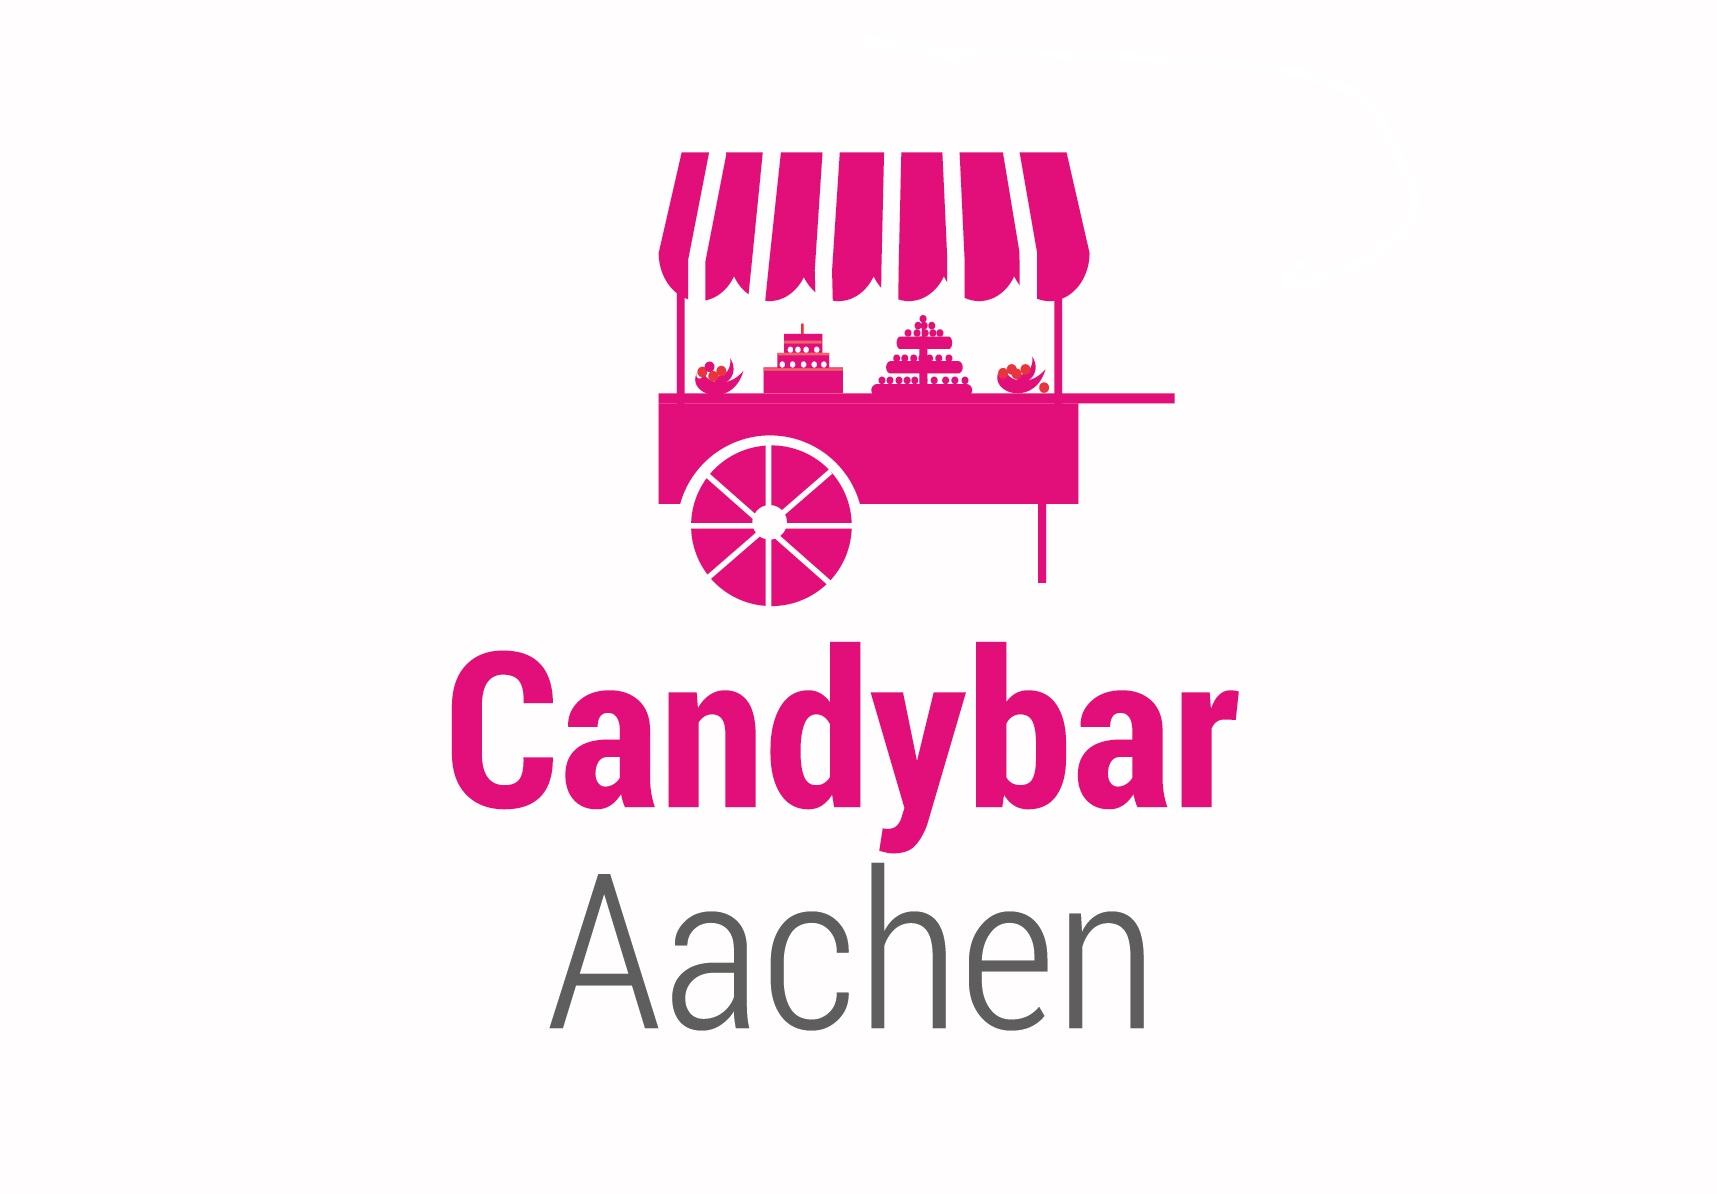 Candybar Aachen